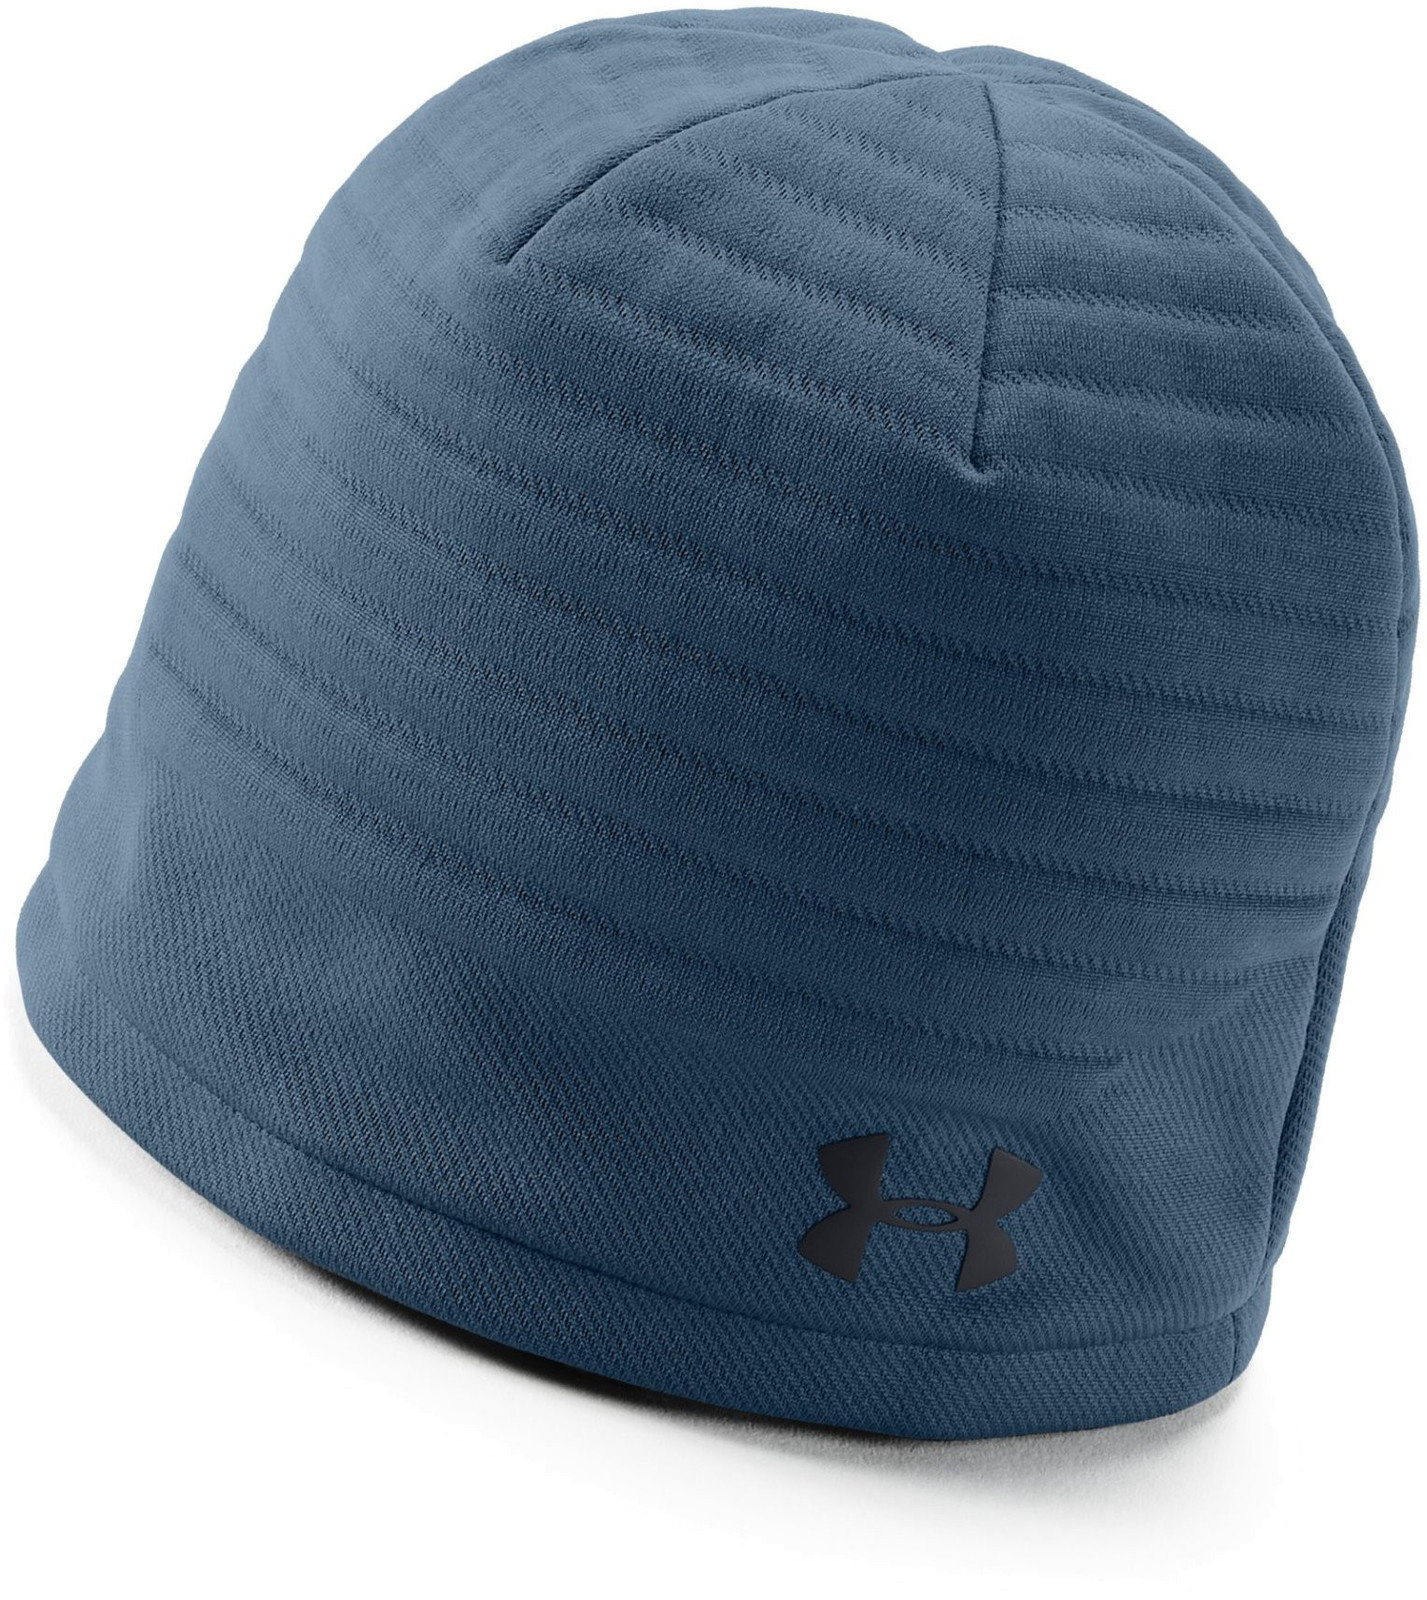 Beanie/Hat Under Armour Men's Golf Daytona Beanie Static Blue